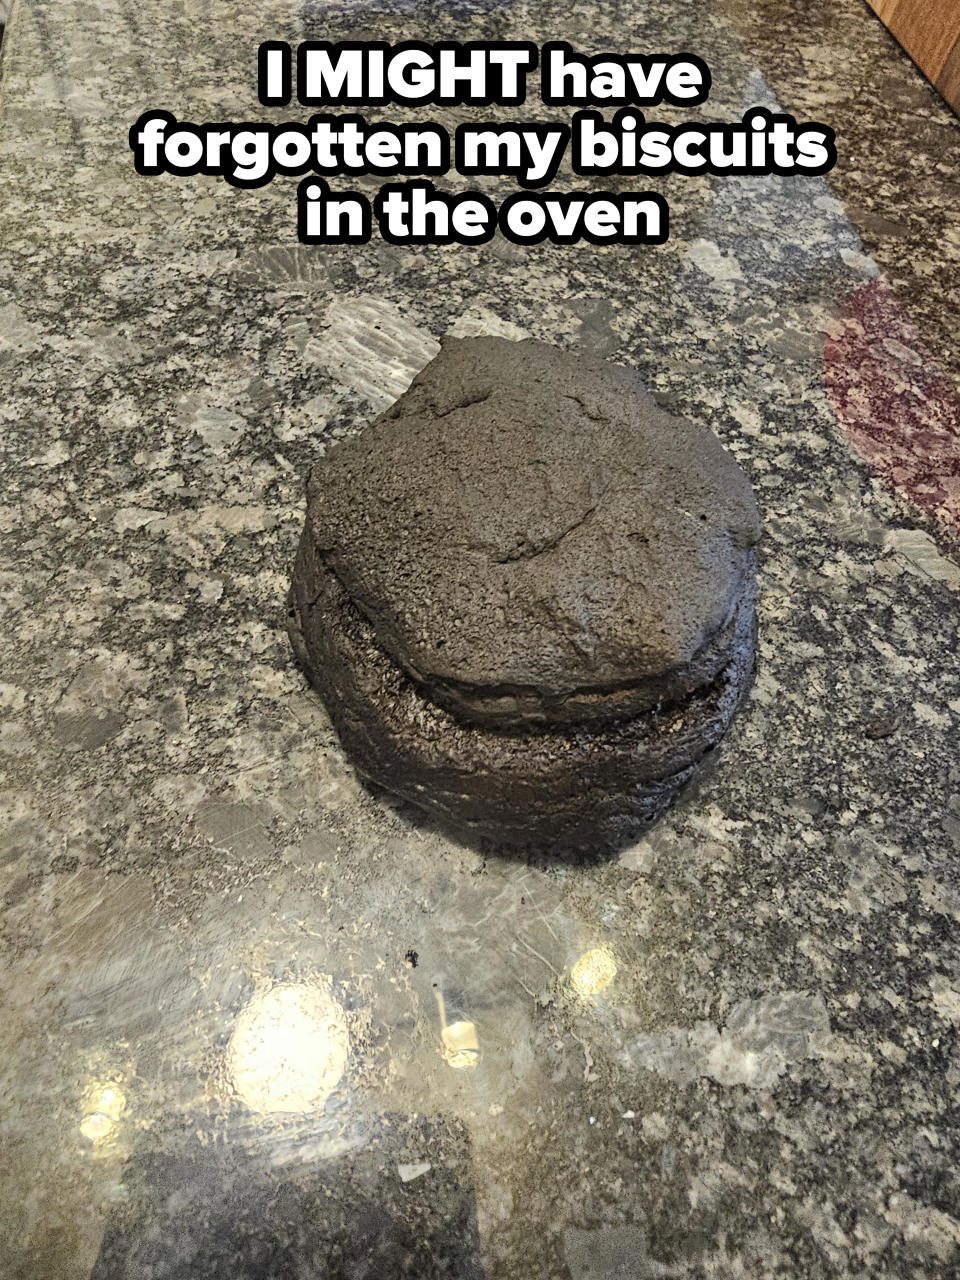 Burnt round cake on a granite countertop